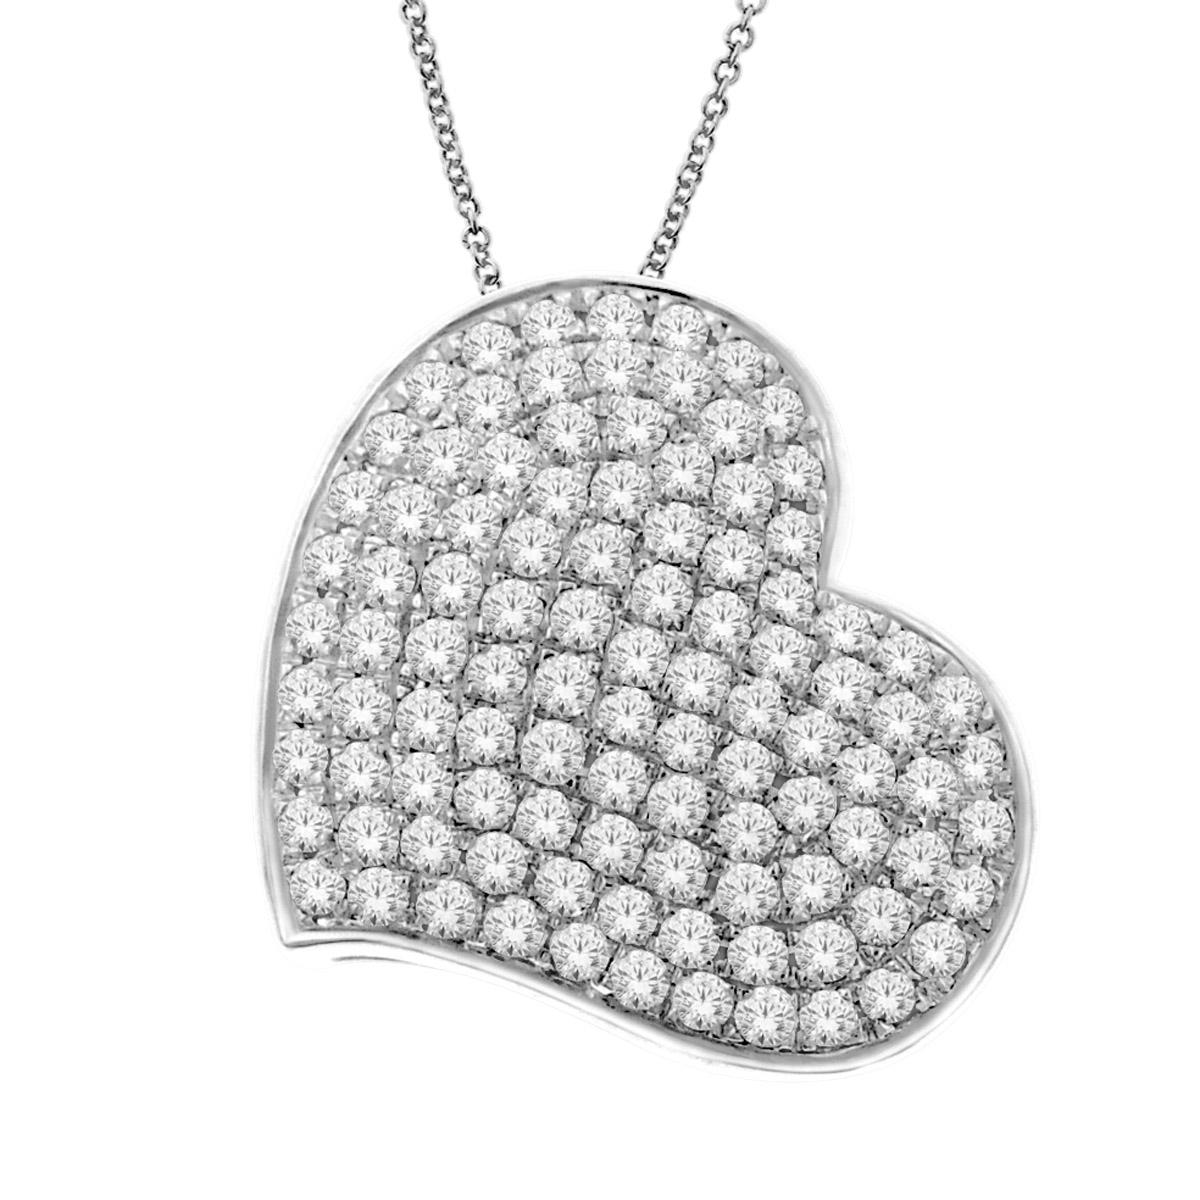 Manufacturers Exporters and Wholesale Suppliers of Diamond Pendant Necklace Mumbai Maharashtra